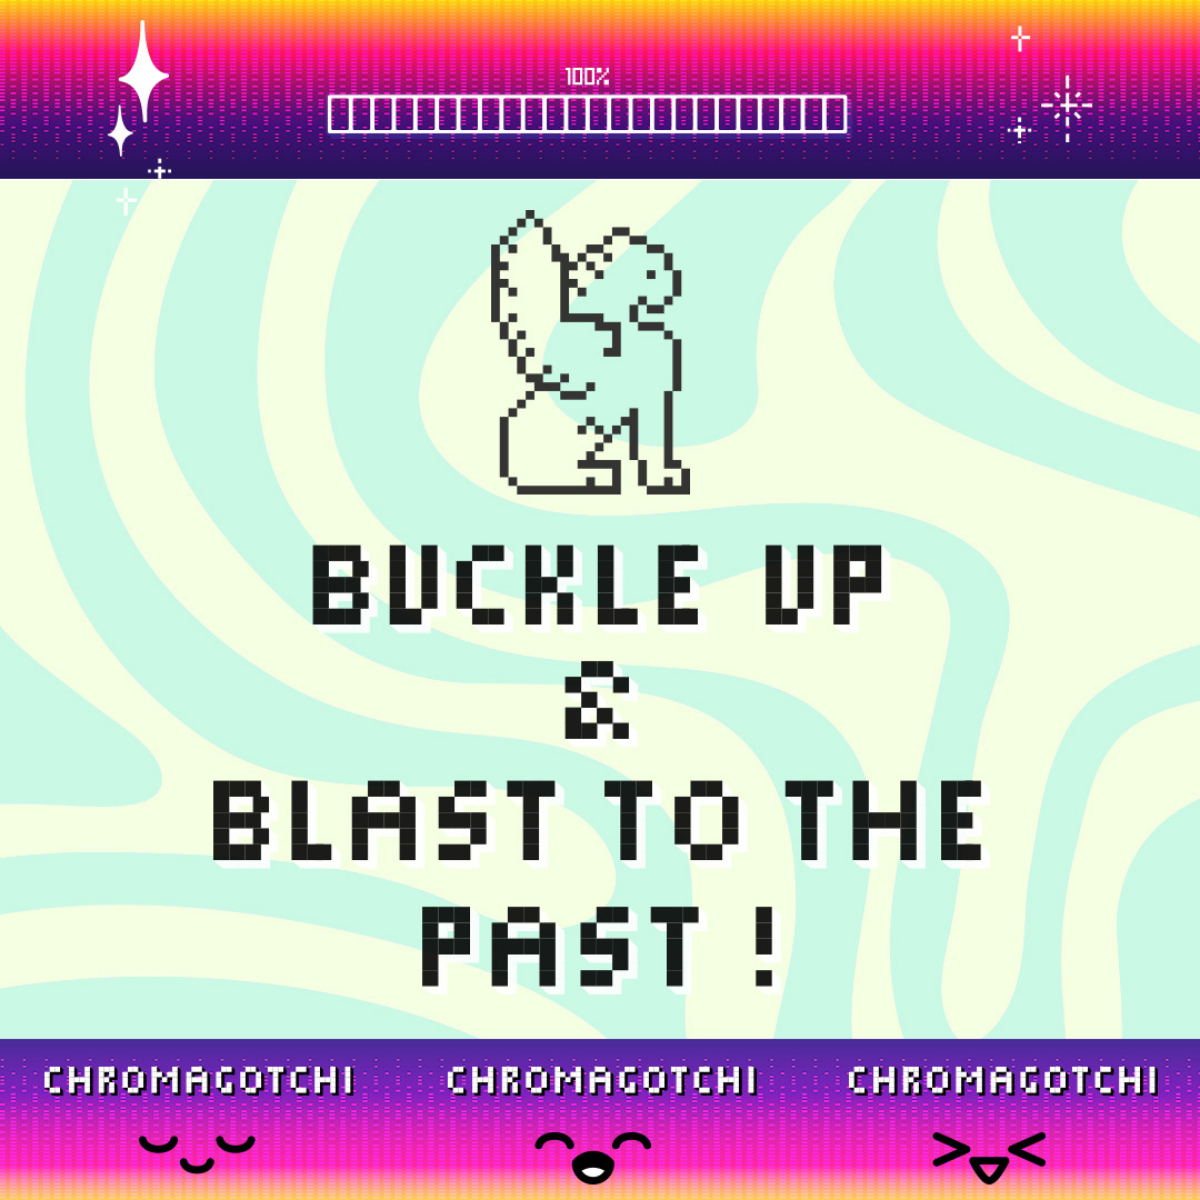 Blast to the past with Chrome's April Fools Chromagotchi